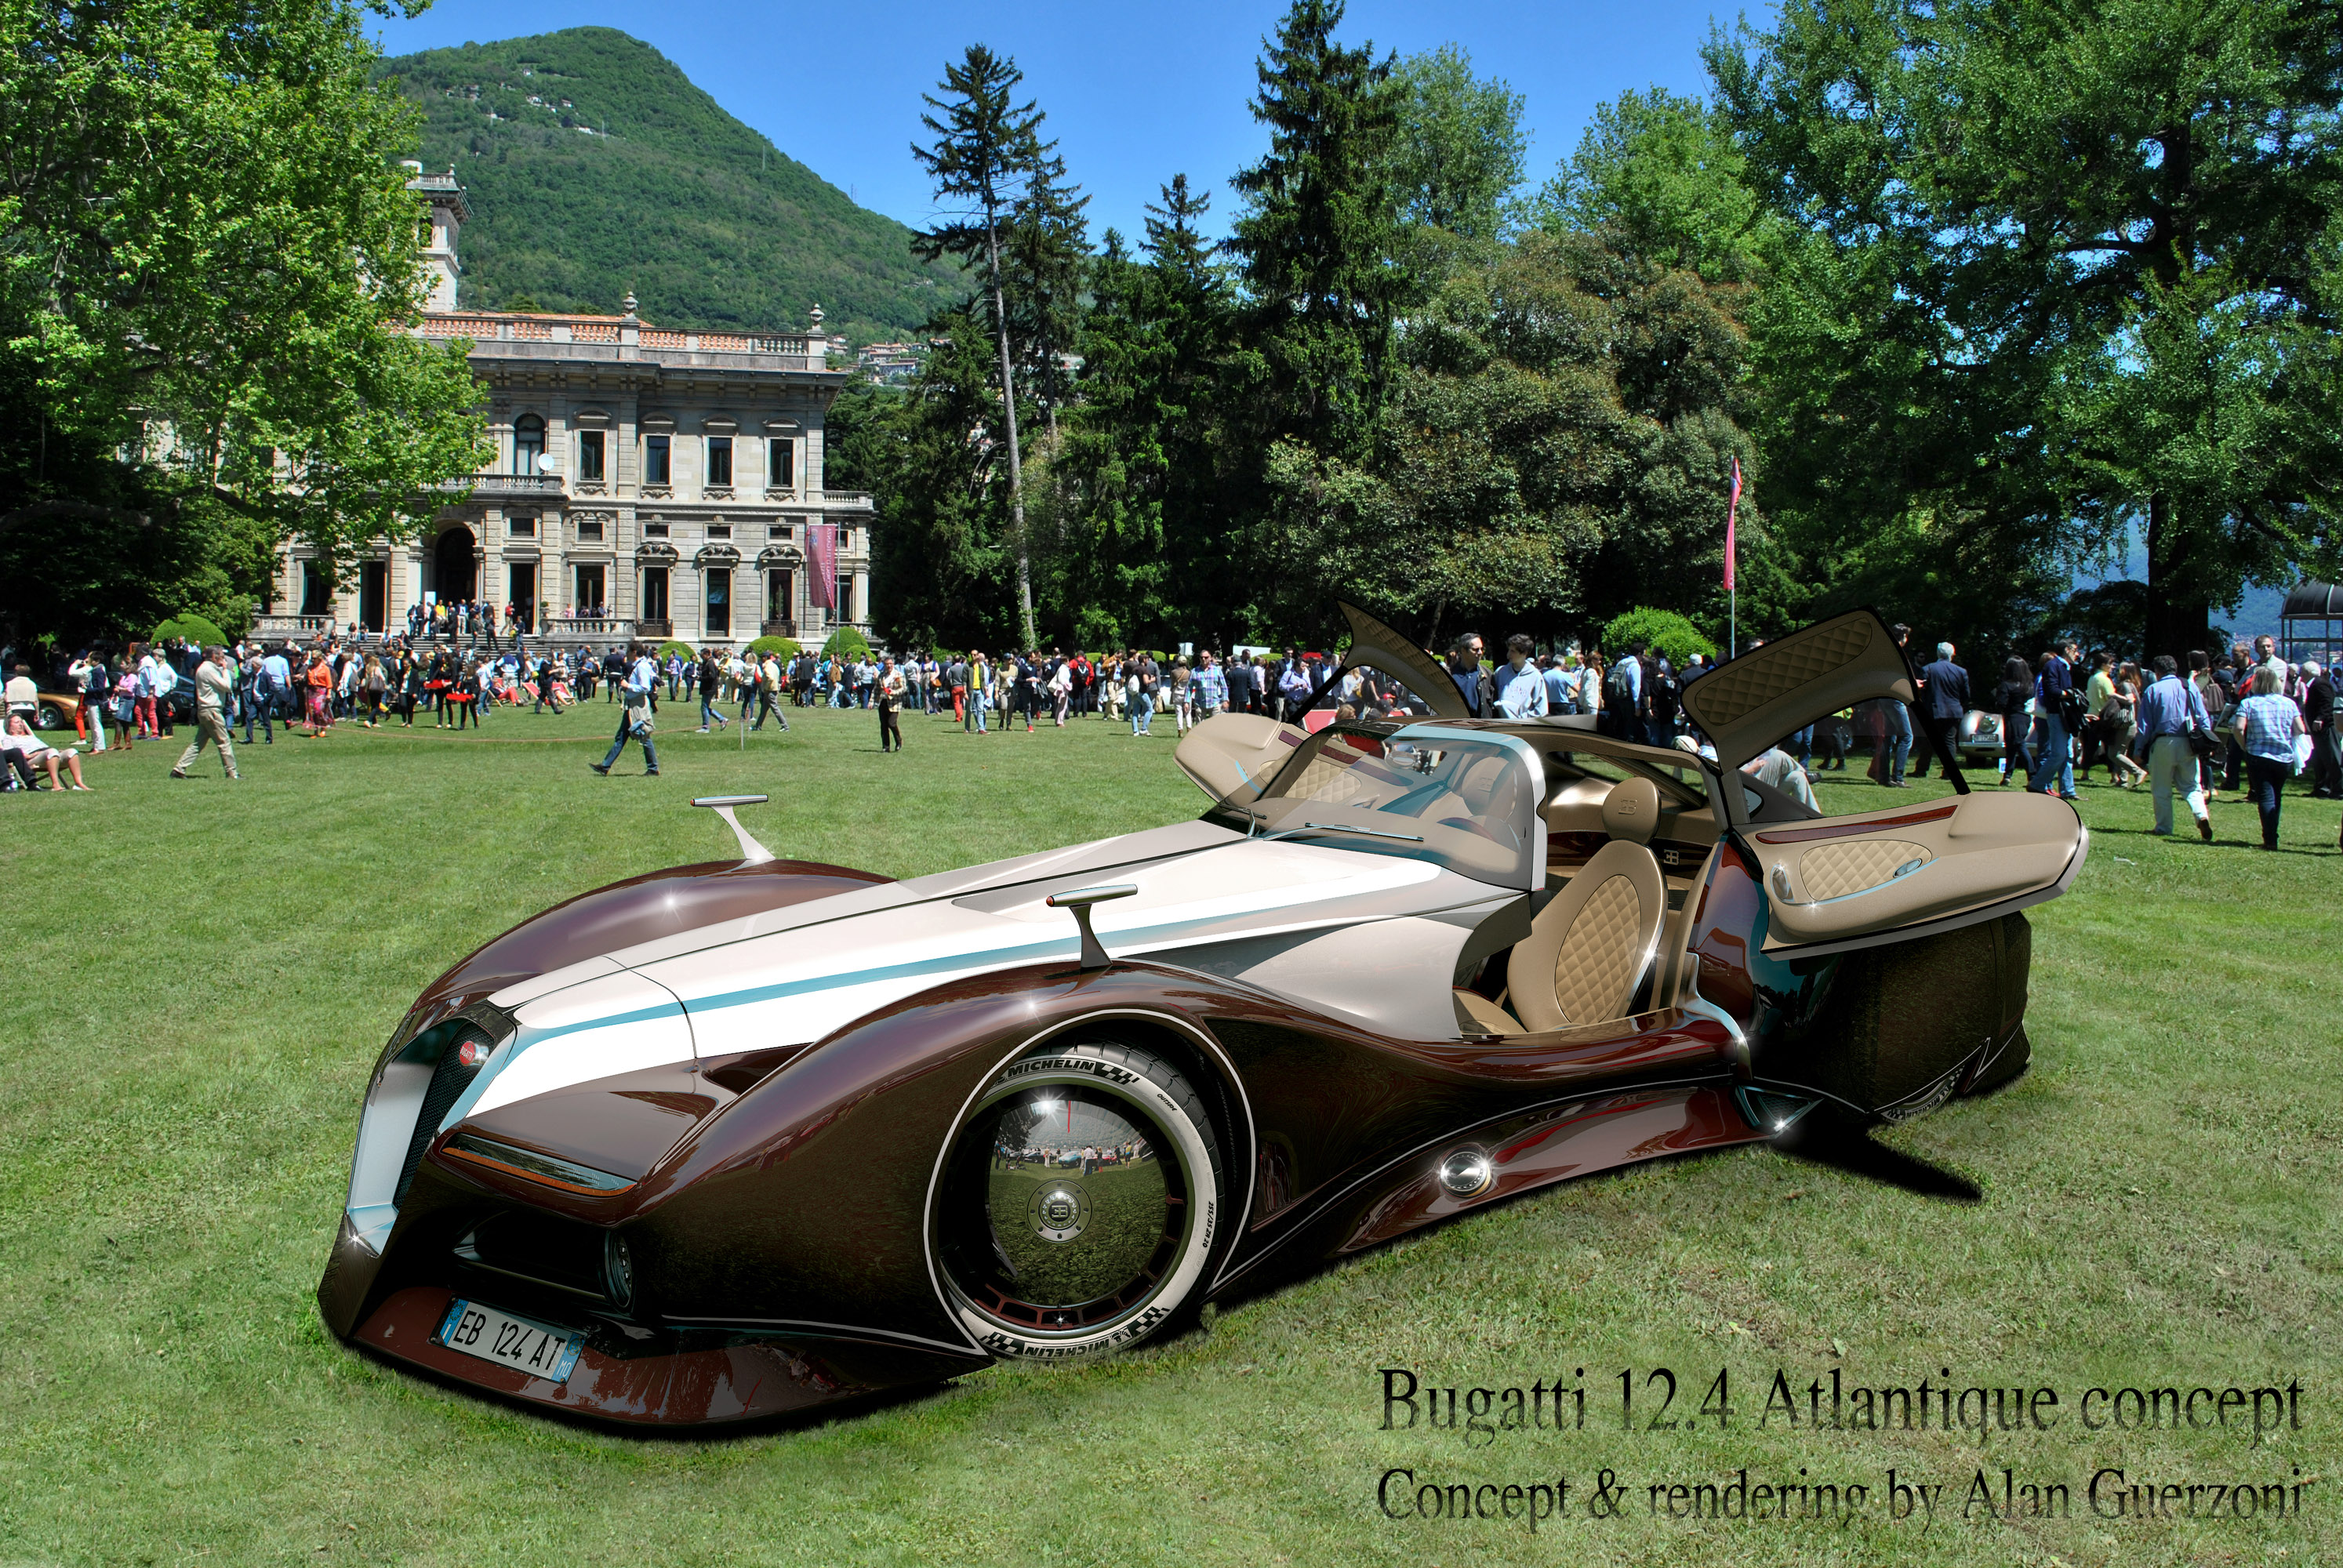 Bugatti 12.4 Atlantique Grand Sport Concept HD wallpapers, Desktop wallpaper - most viewed